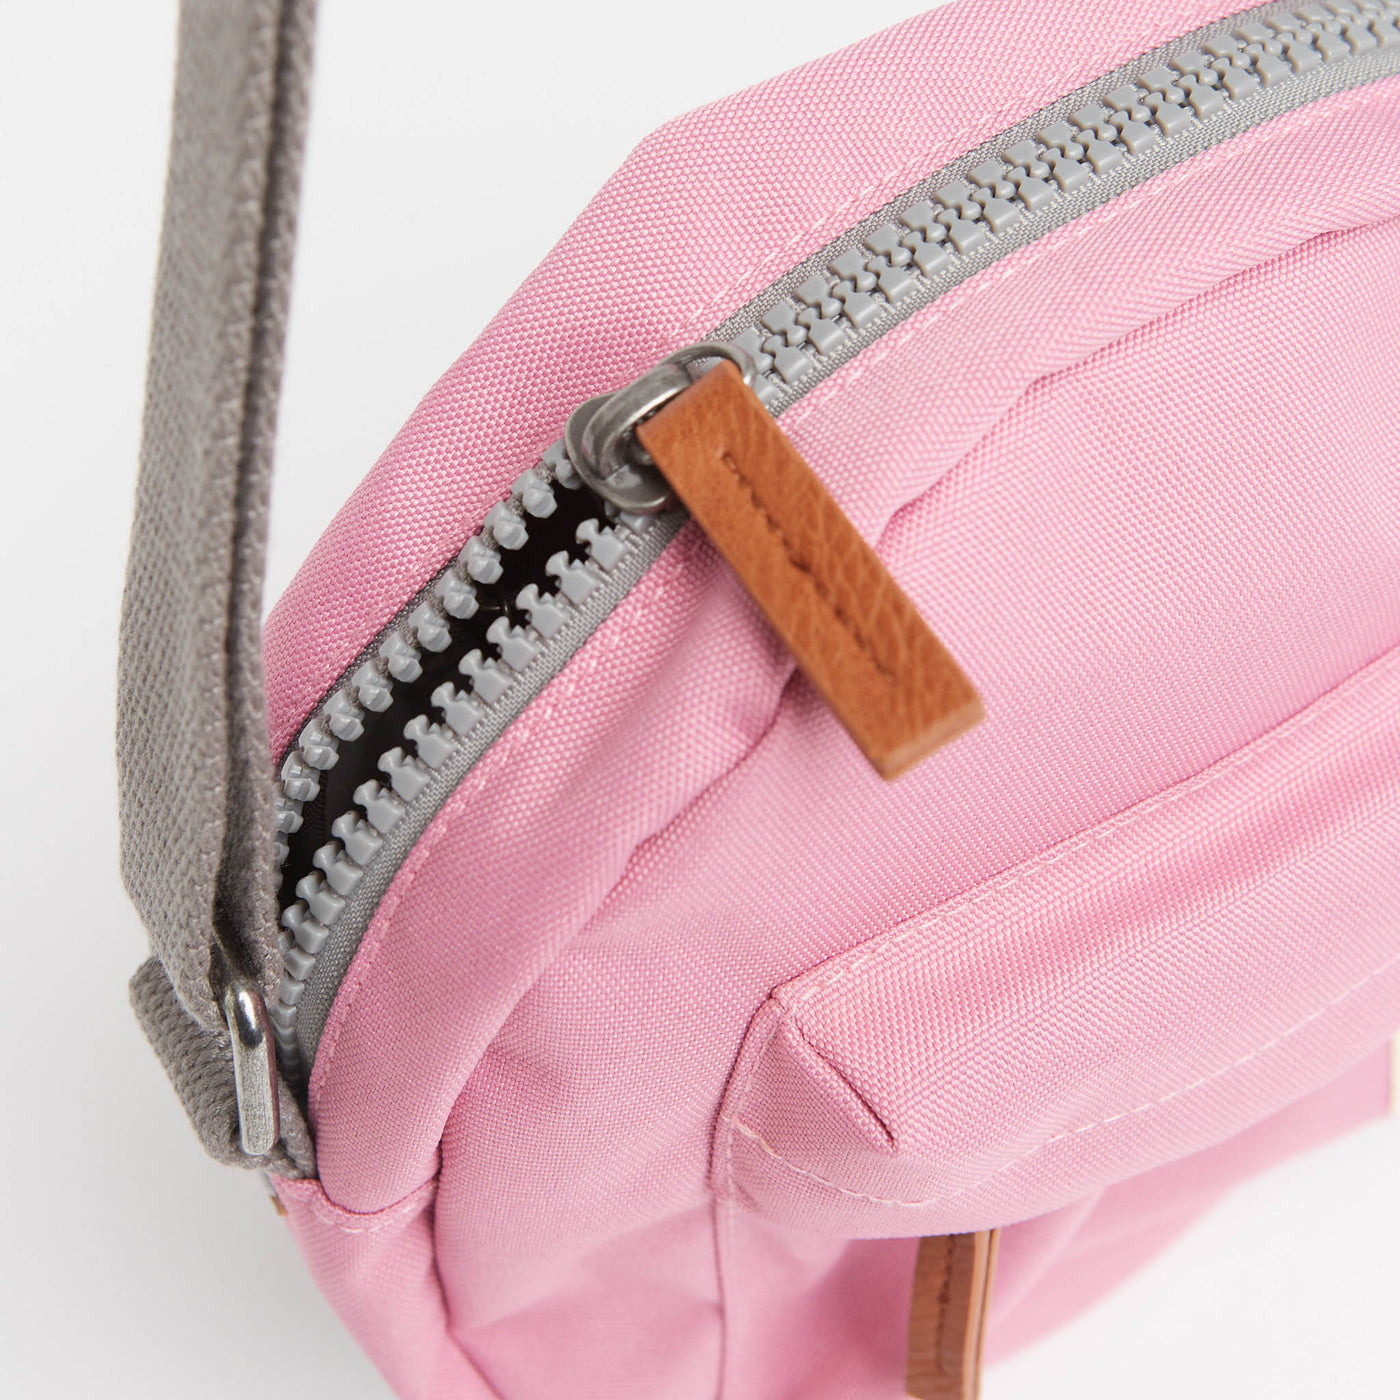 Roka | Sustainable Bag | Crossbody Bag | Pink